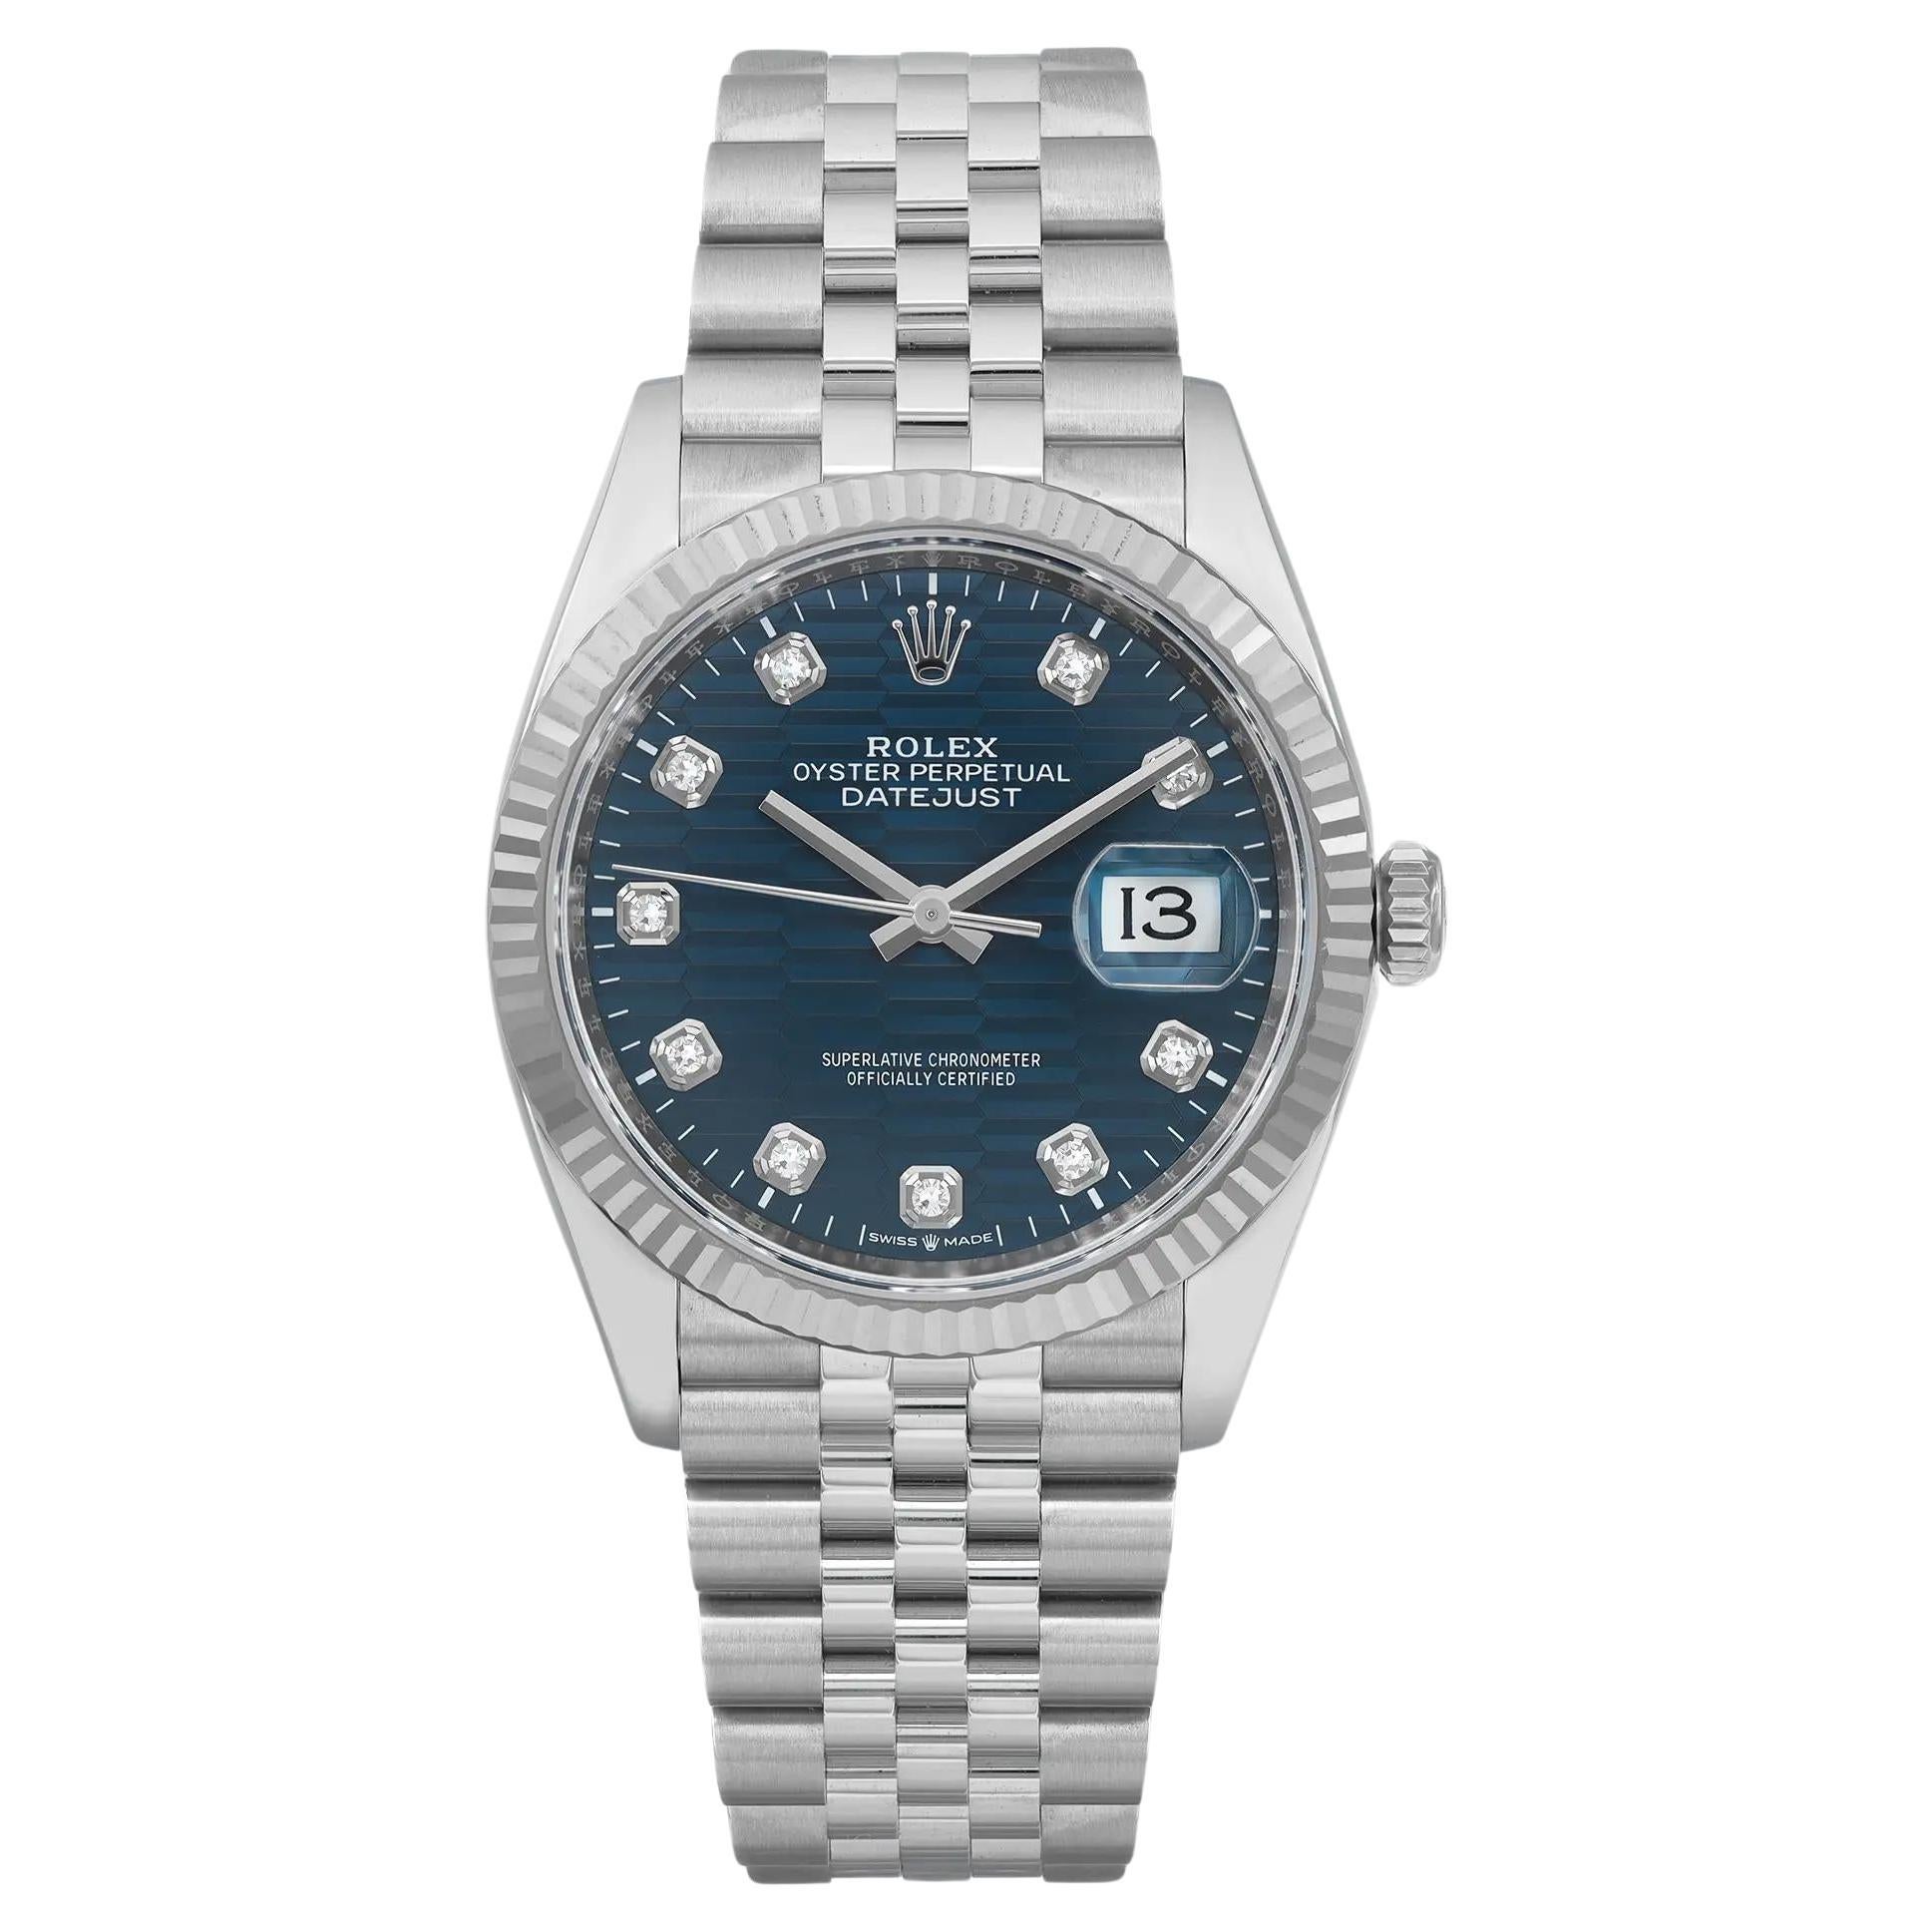 NEW Rolex Datejust 36mm Jubilee Steel Blue Motif Dial Automatic Watch 126234 For Sale